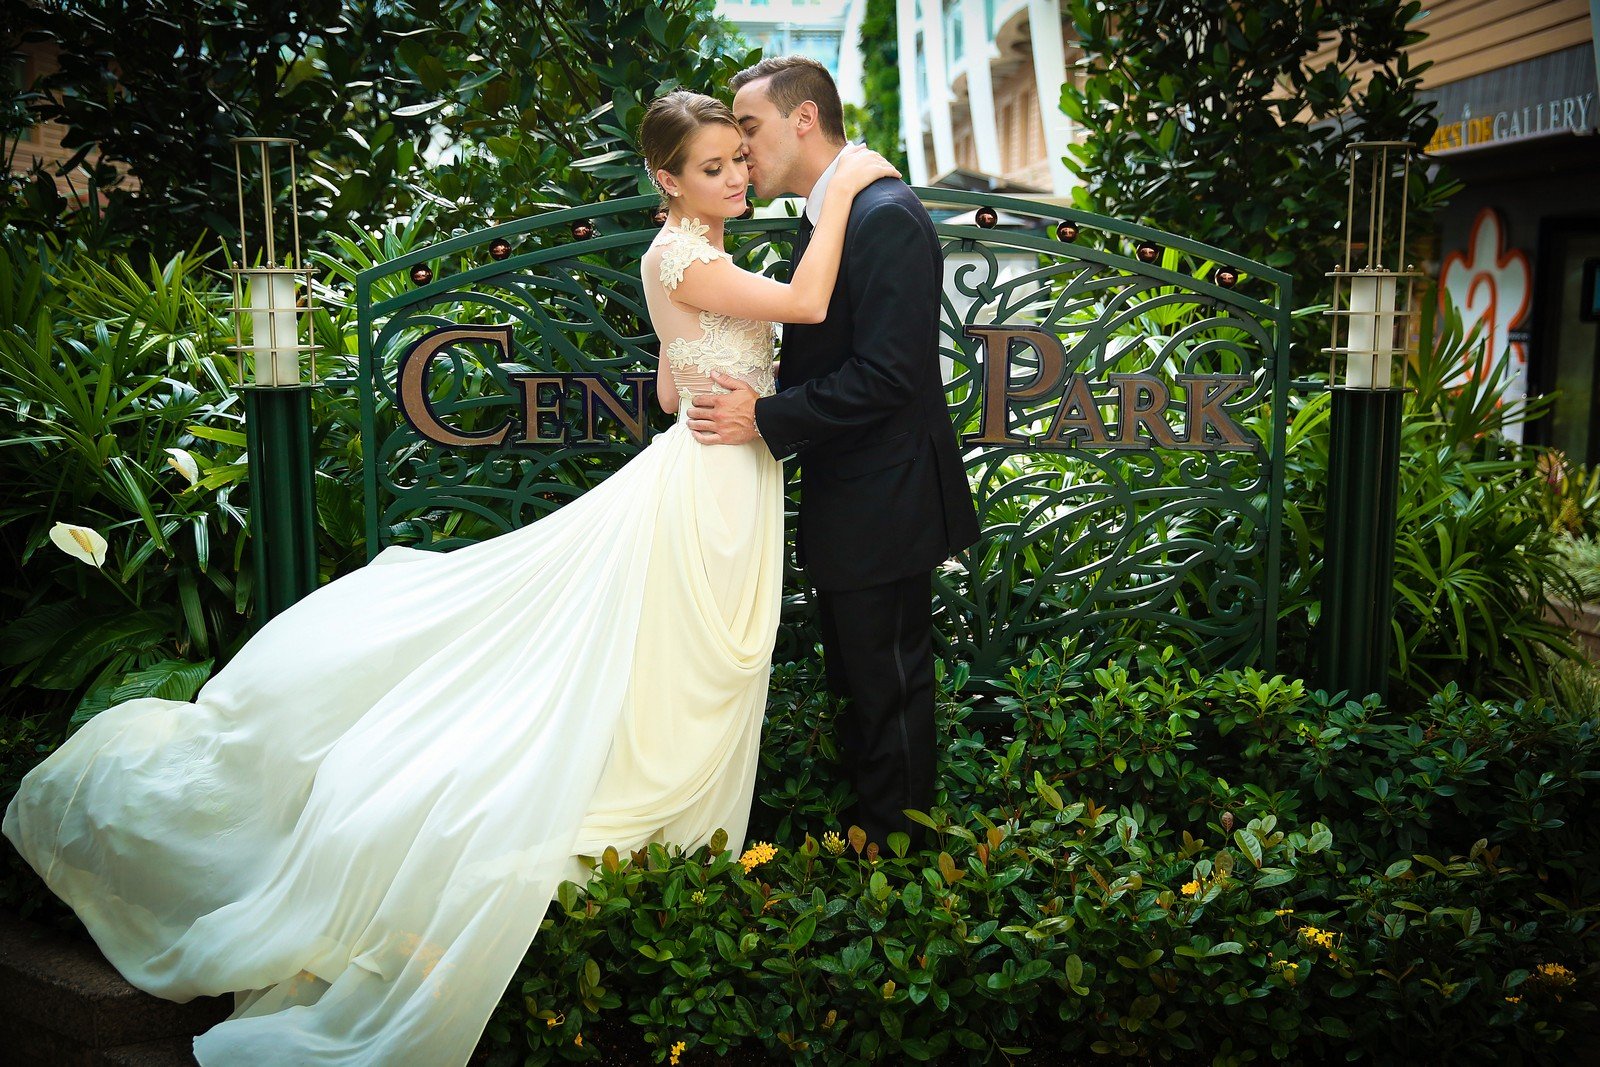 Royal Romance How to plan your dream wedding at sea Royal Caribbean Blog photo